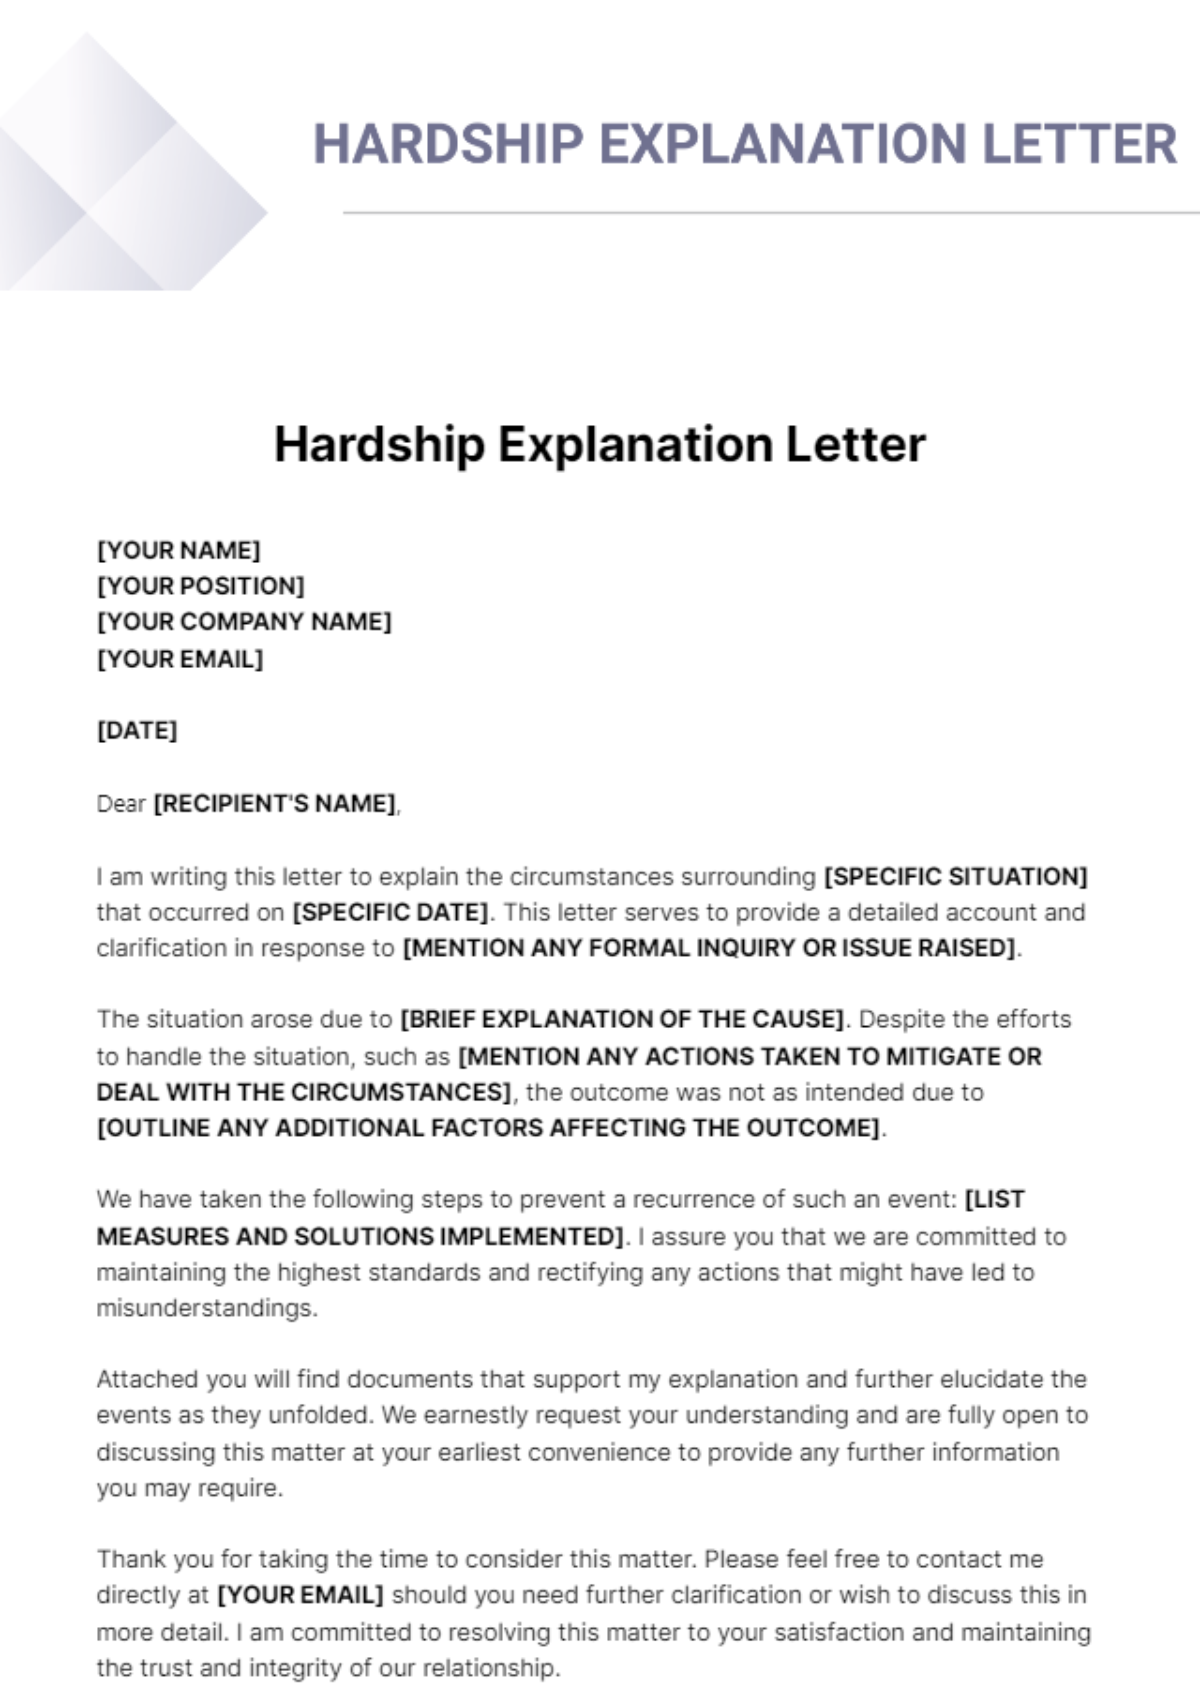 Hardship Explanation Letter Template